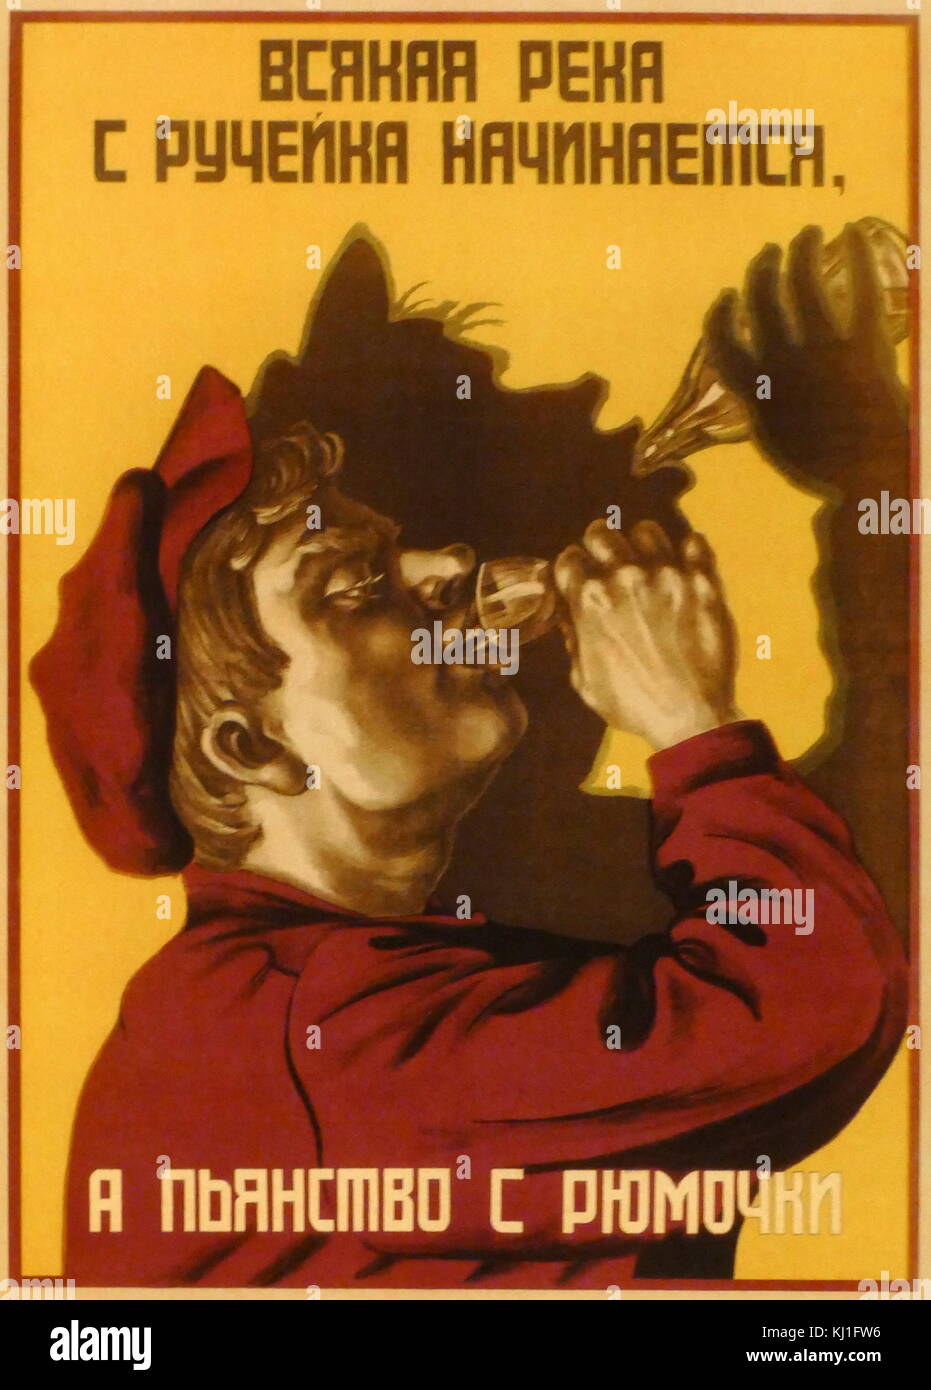 PROPAGANDA POLITICAL ALCOHOL SOVIET COMMUNISM USSR FOOD DRINK ART PRINT BB2515B 